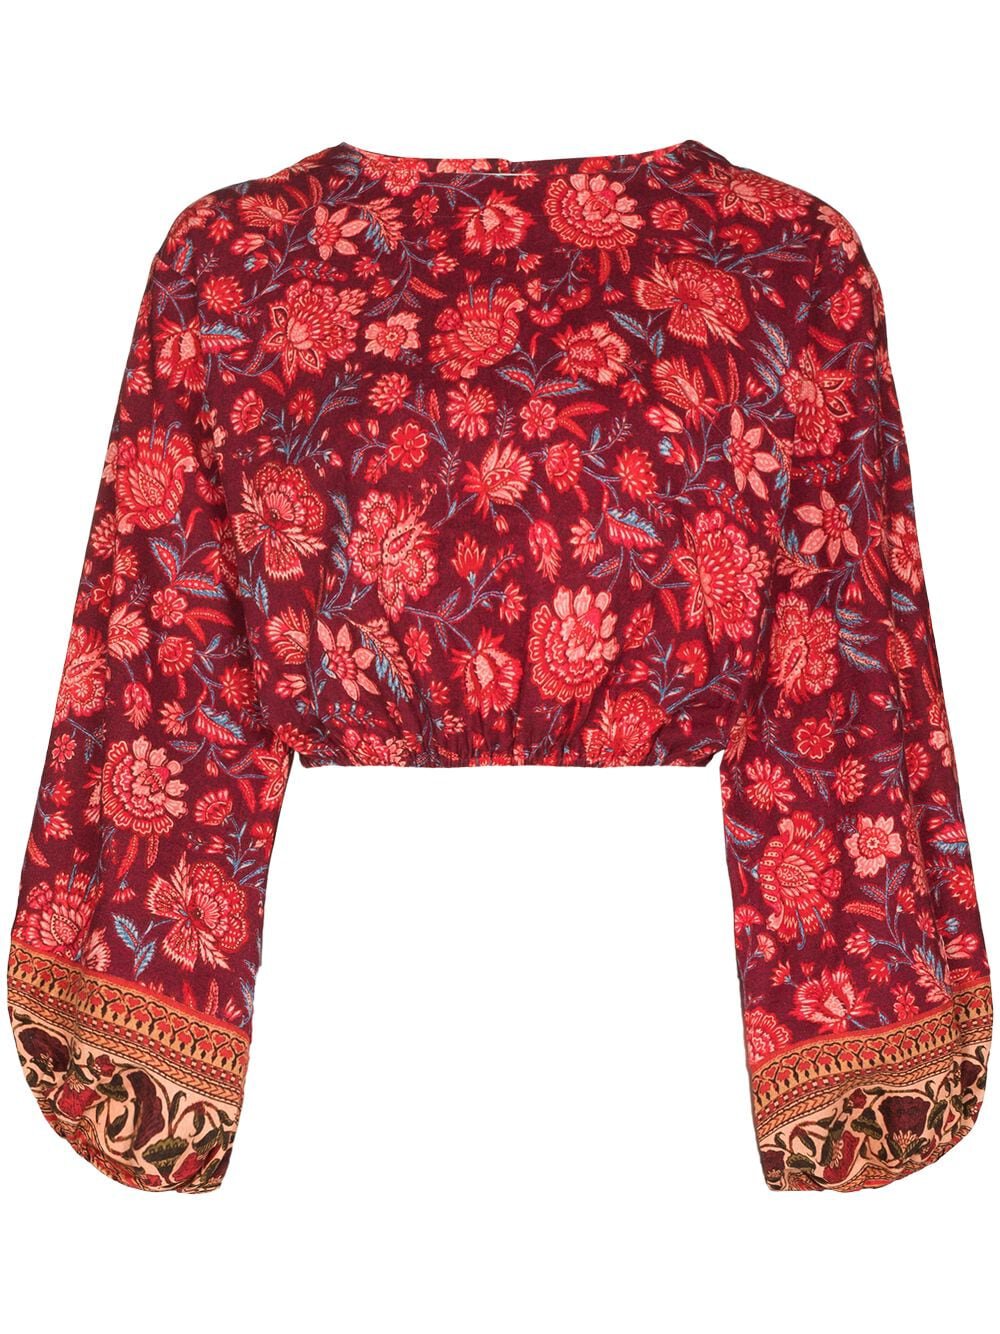 Boteh 'Petra' Floral-Print Cotton-Linen Cropped Top